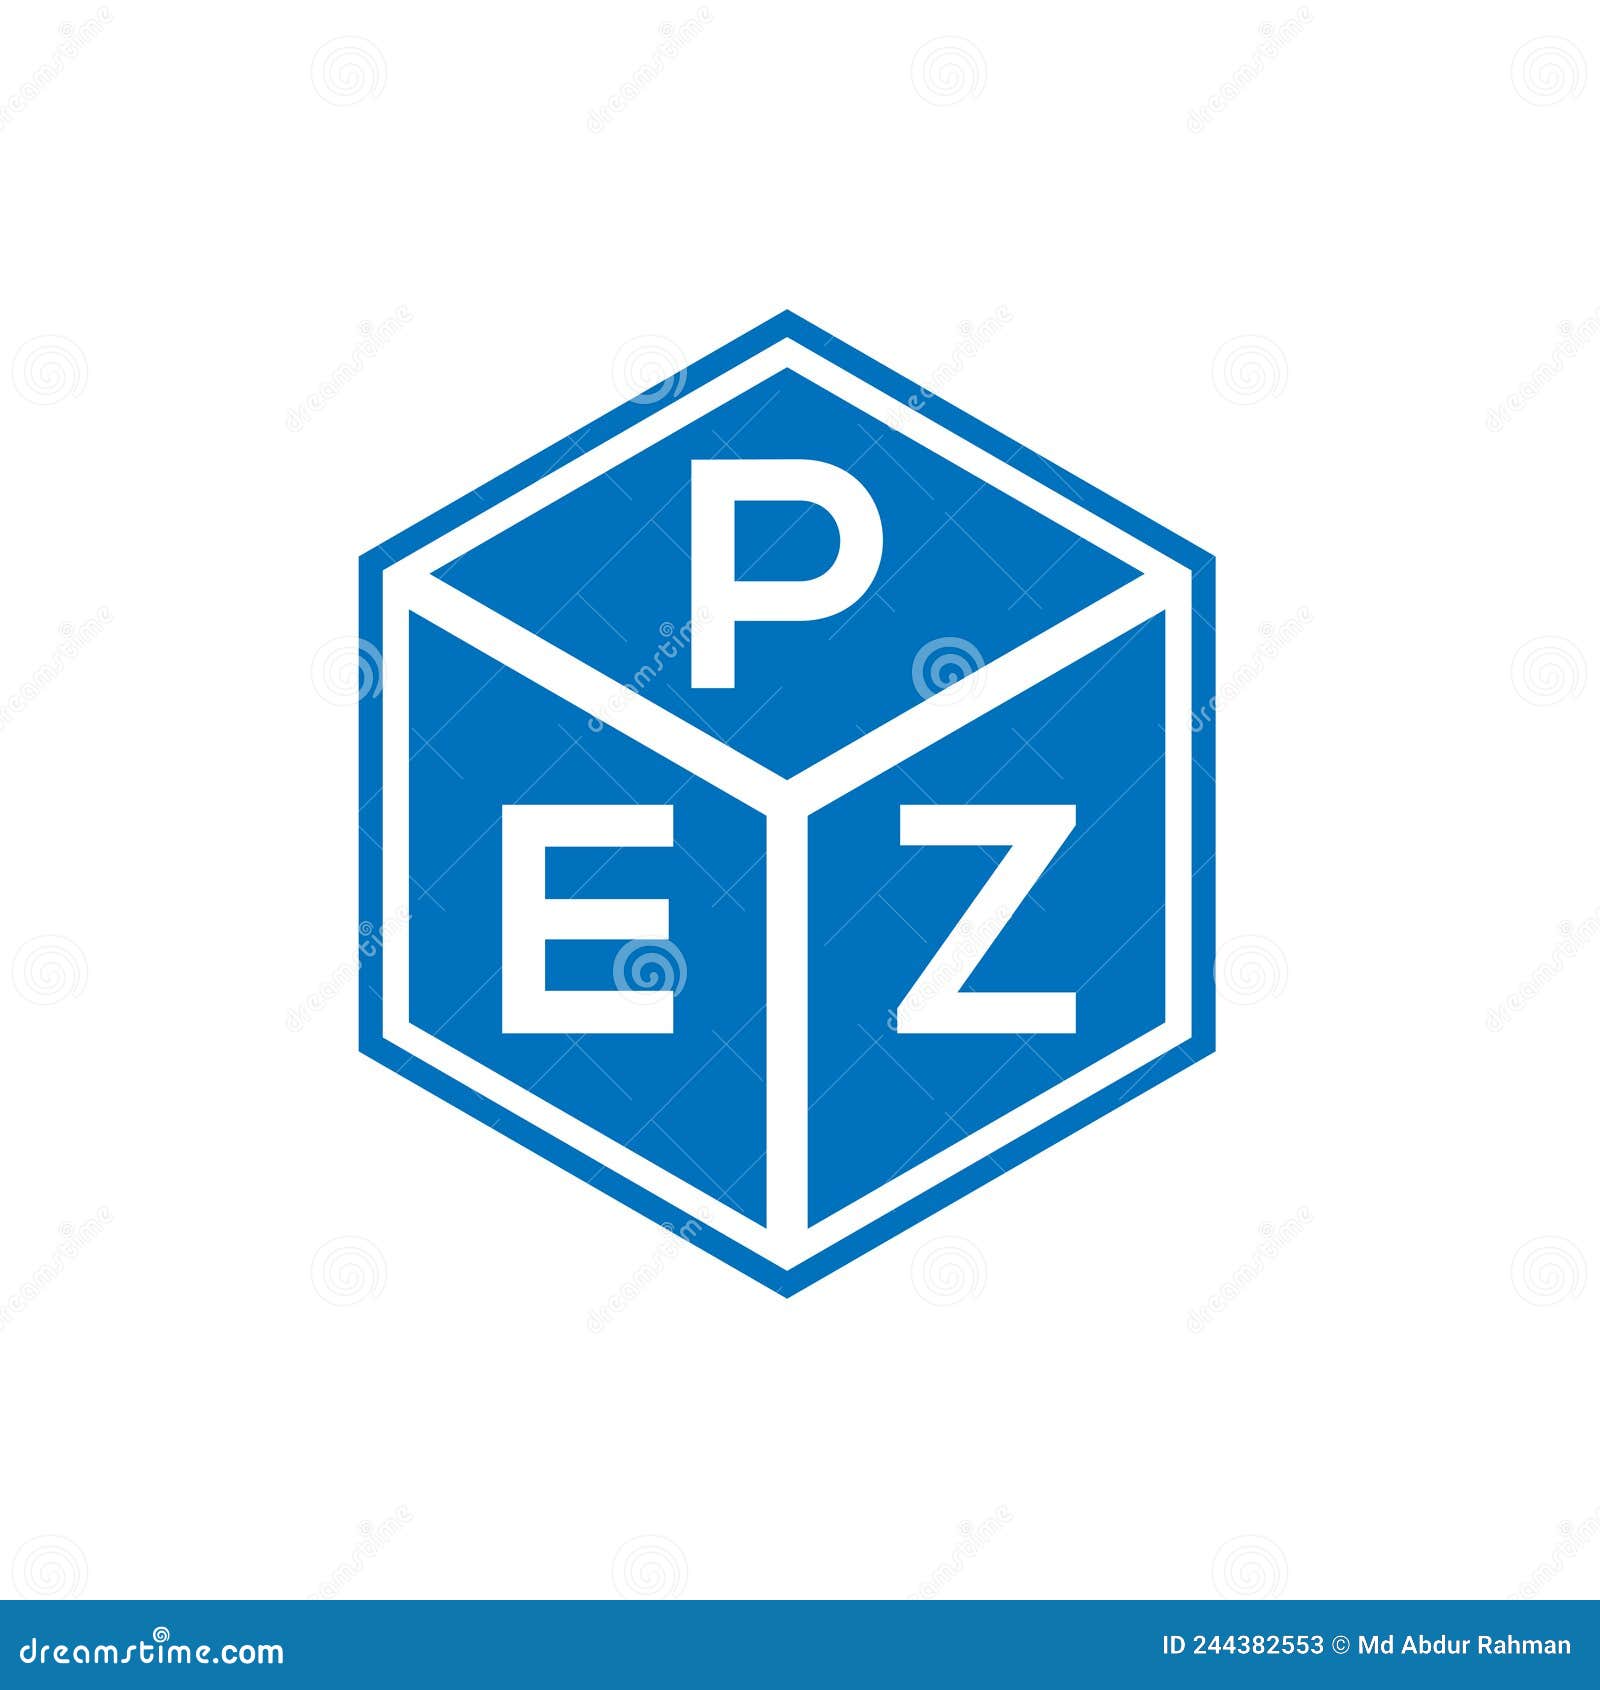 pez letter logo  on black background. pez creative initials letter logo concept. pez letter 